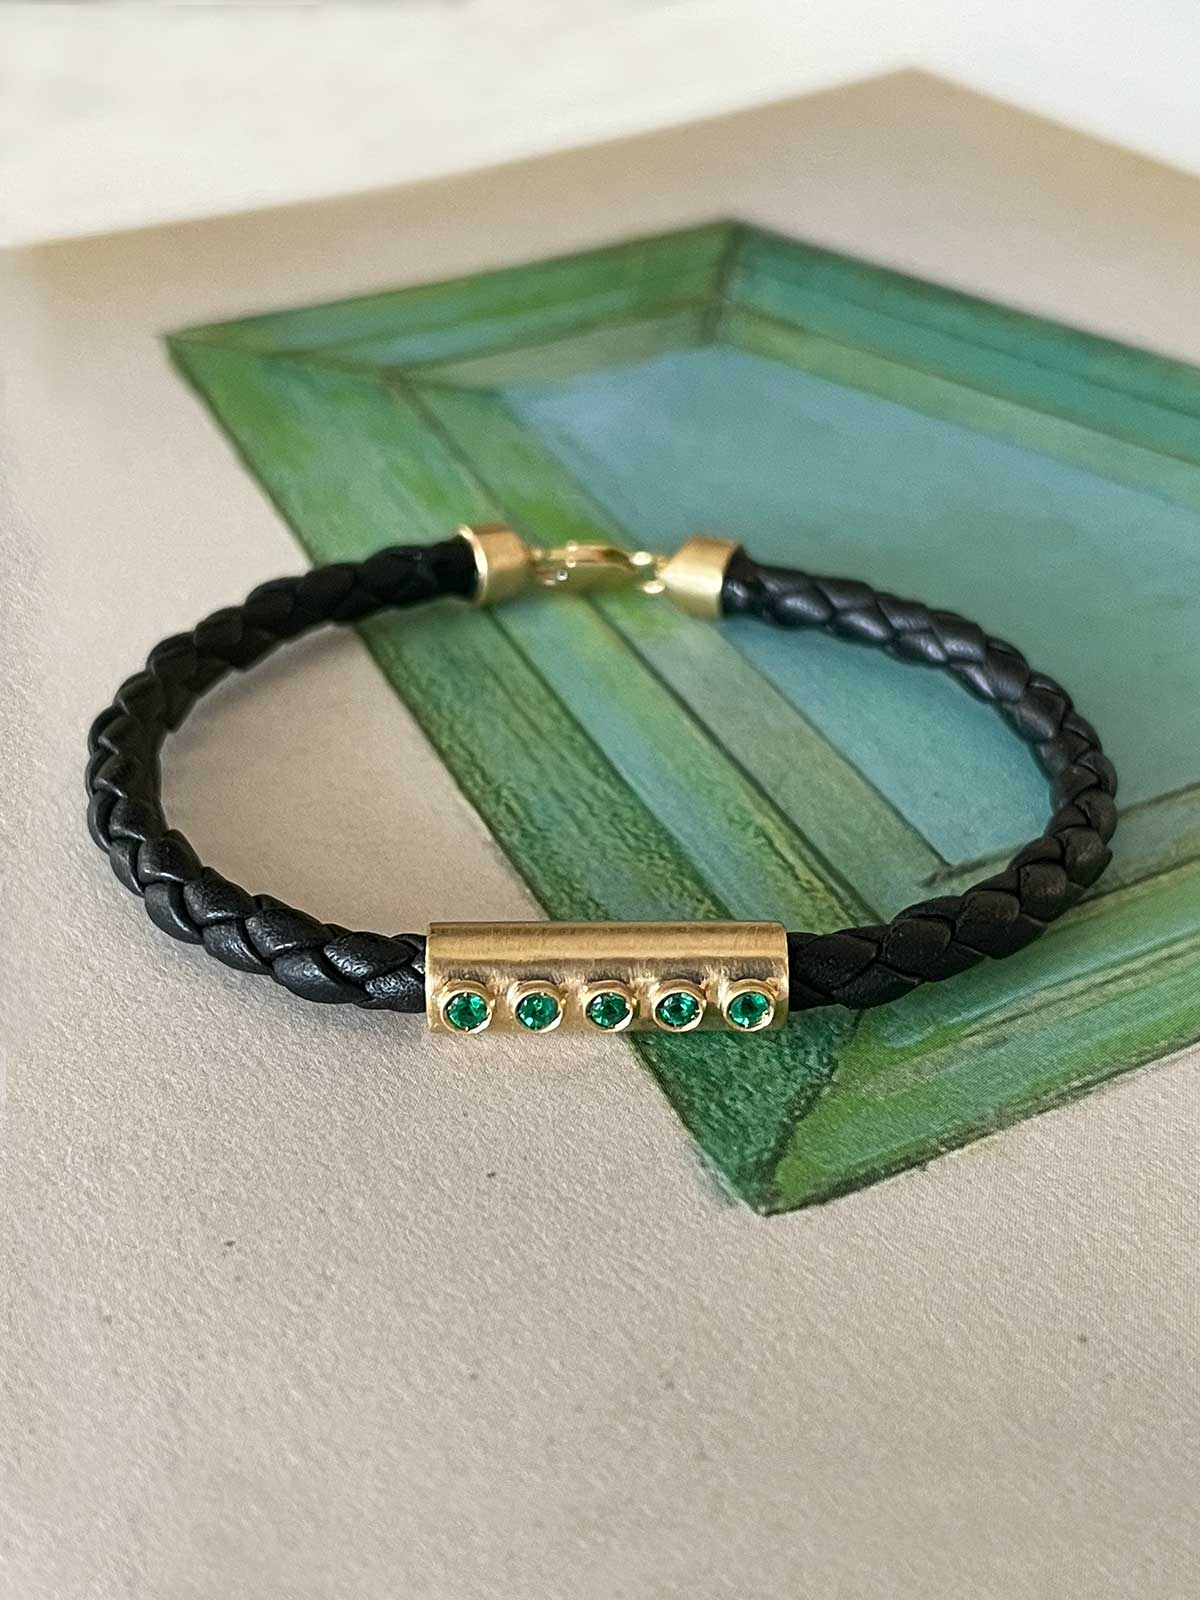 Emerald Essence - Bracelet in 18 karat solid gold with Emeralds